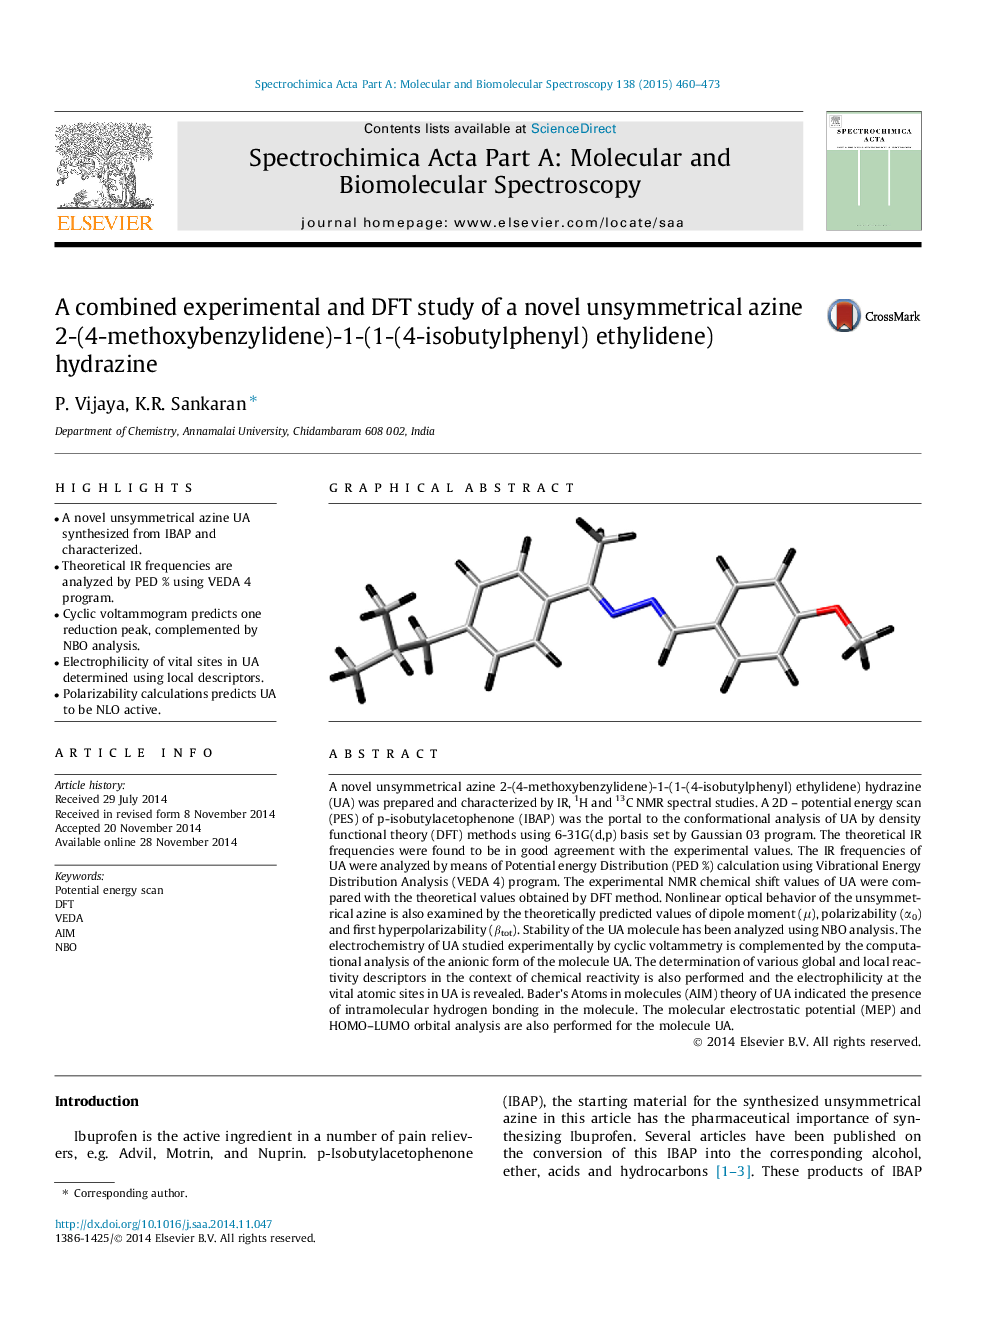 A combined experimental and DFT study of a novel unsymmetrical azine 2-(4-methoxybenzylidene)-1-(1-(4-isobutylphenyl) ethylidene) hydrazine